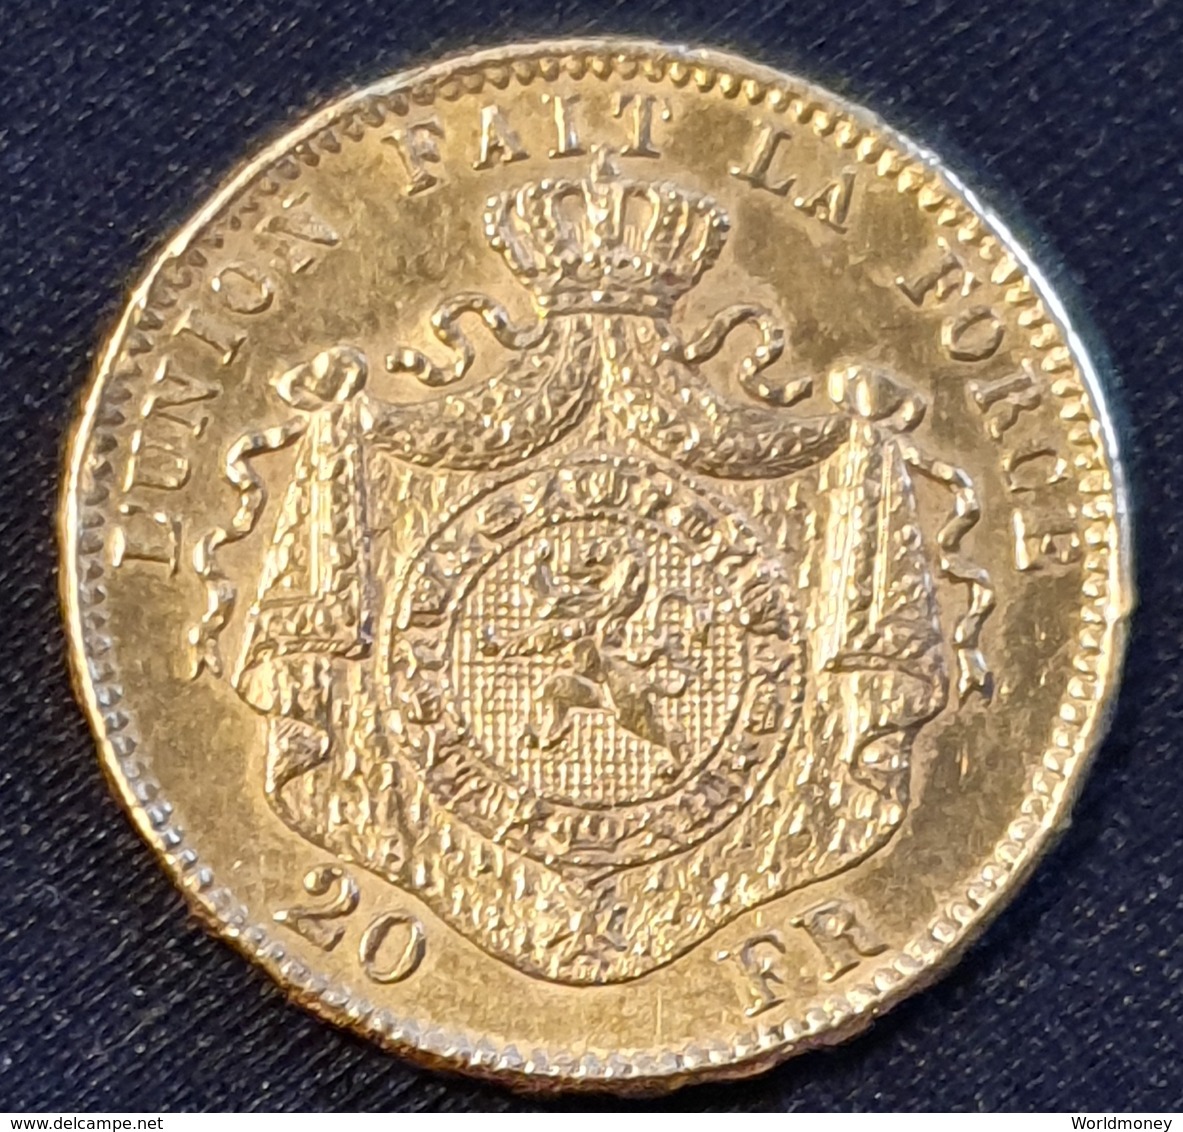 Belgium 20 Francs 1875 (Gold) - 20 Frank (goud)